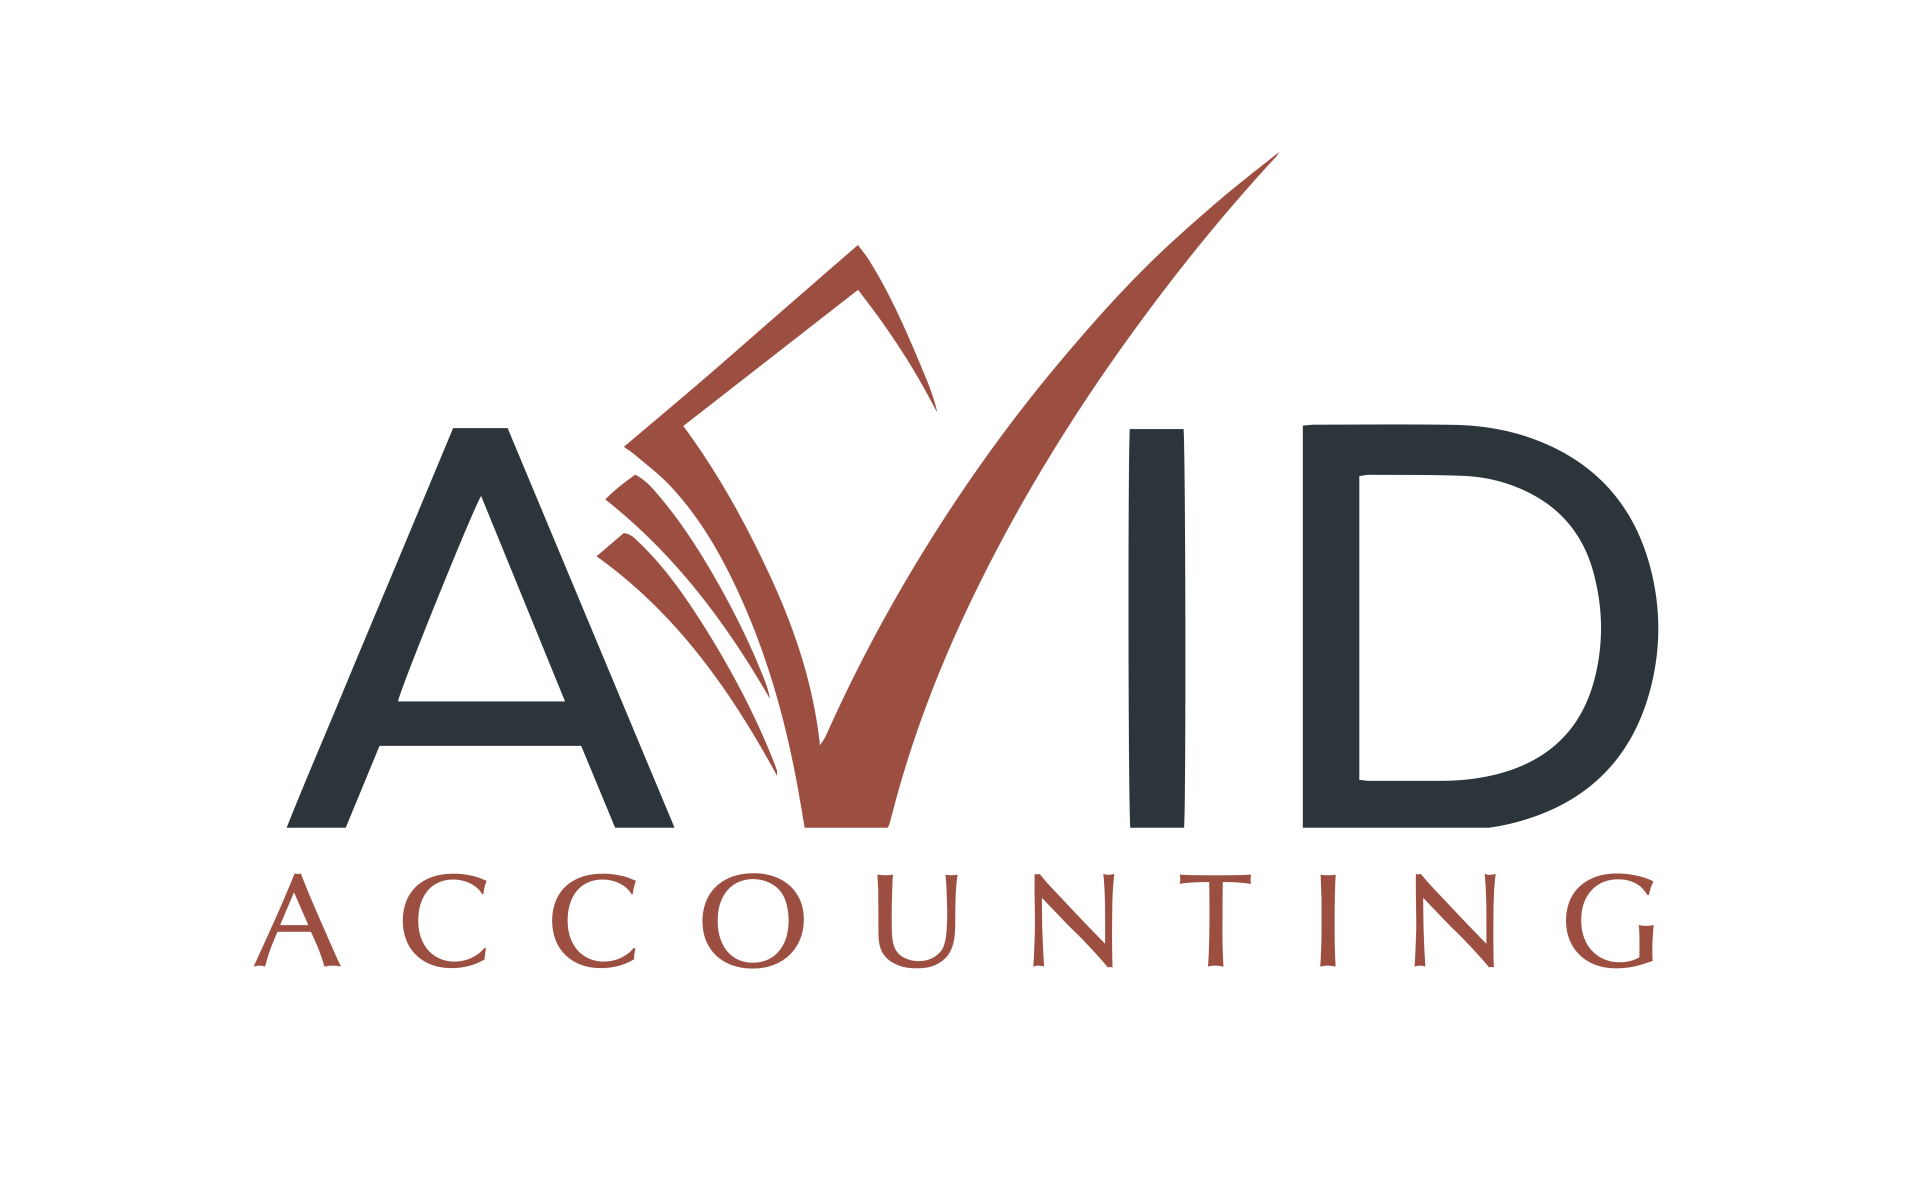 Avid Accounting logo